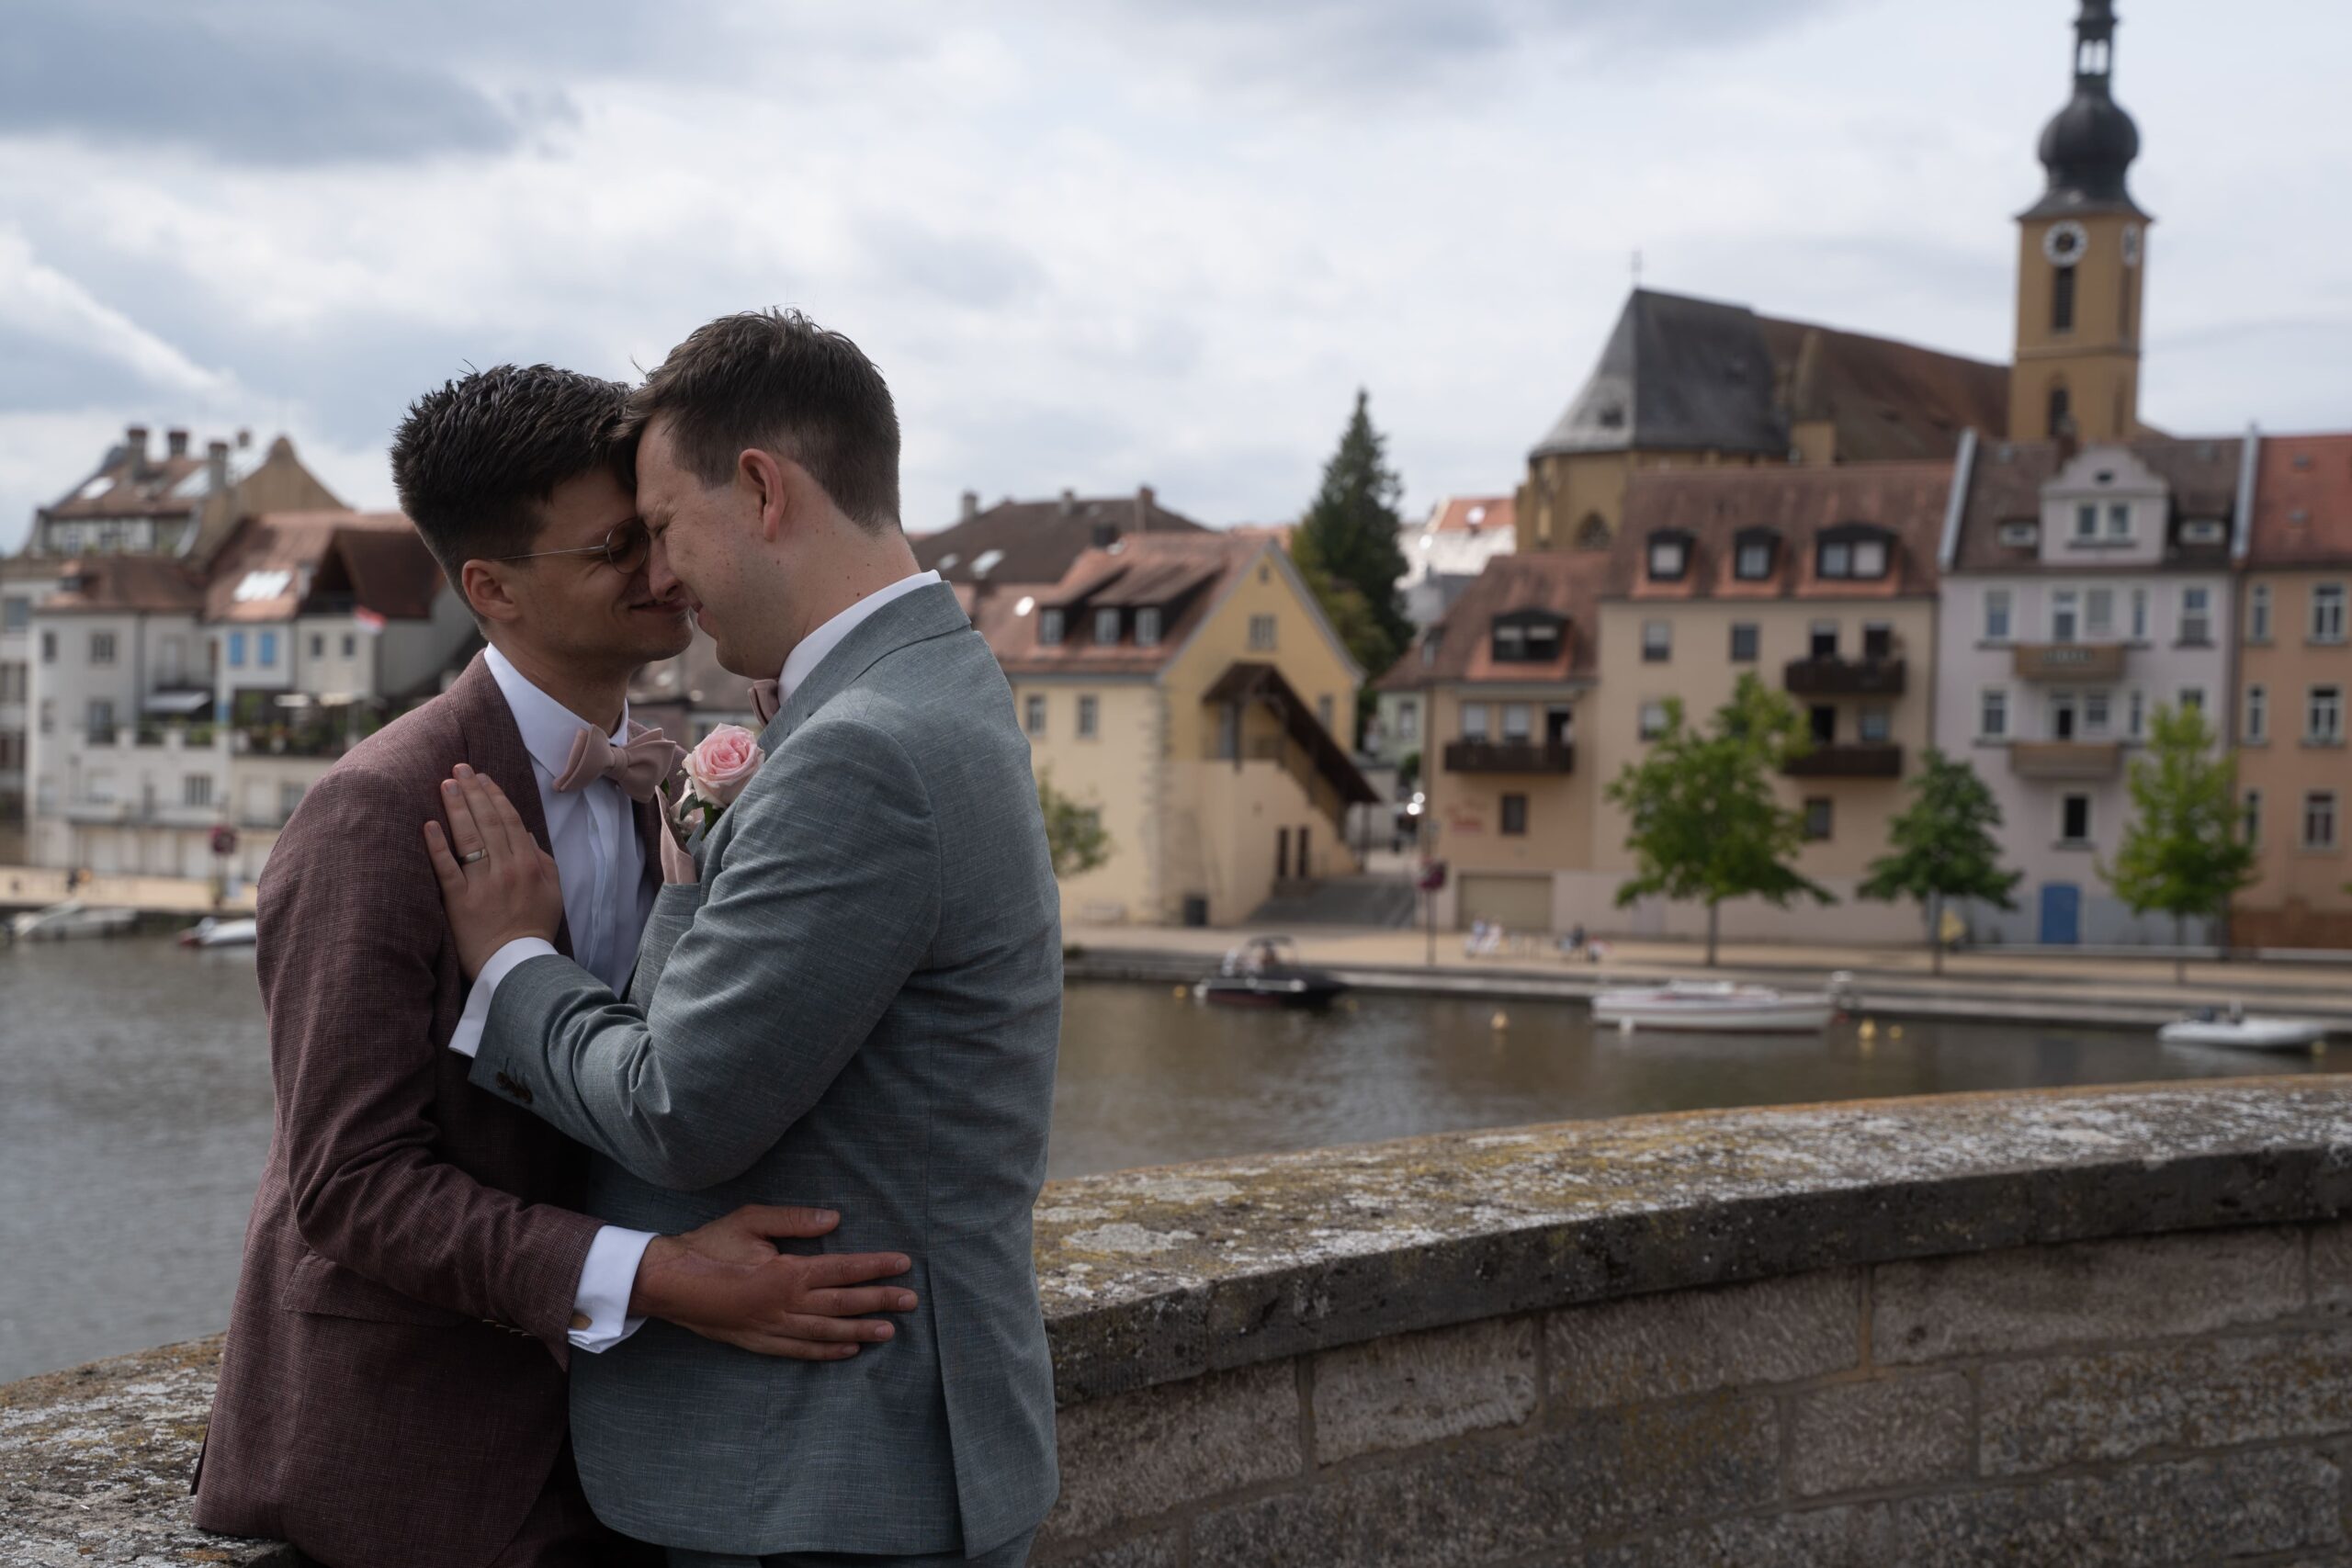 Hochzeitspaar kopf aneinander gay schwul paar liebe